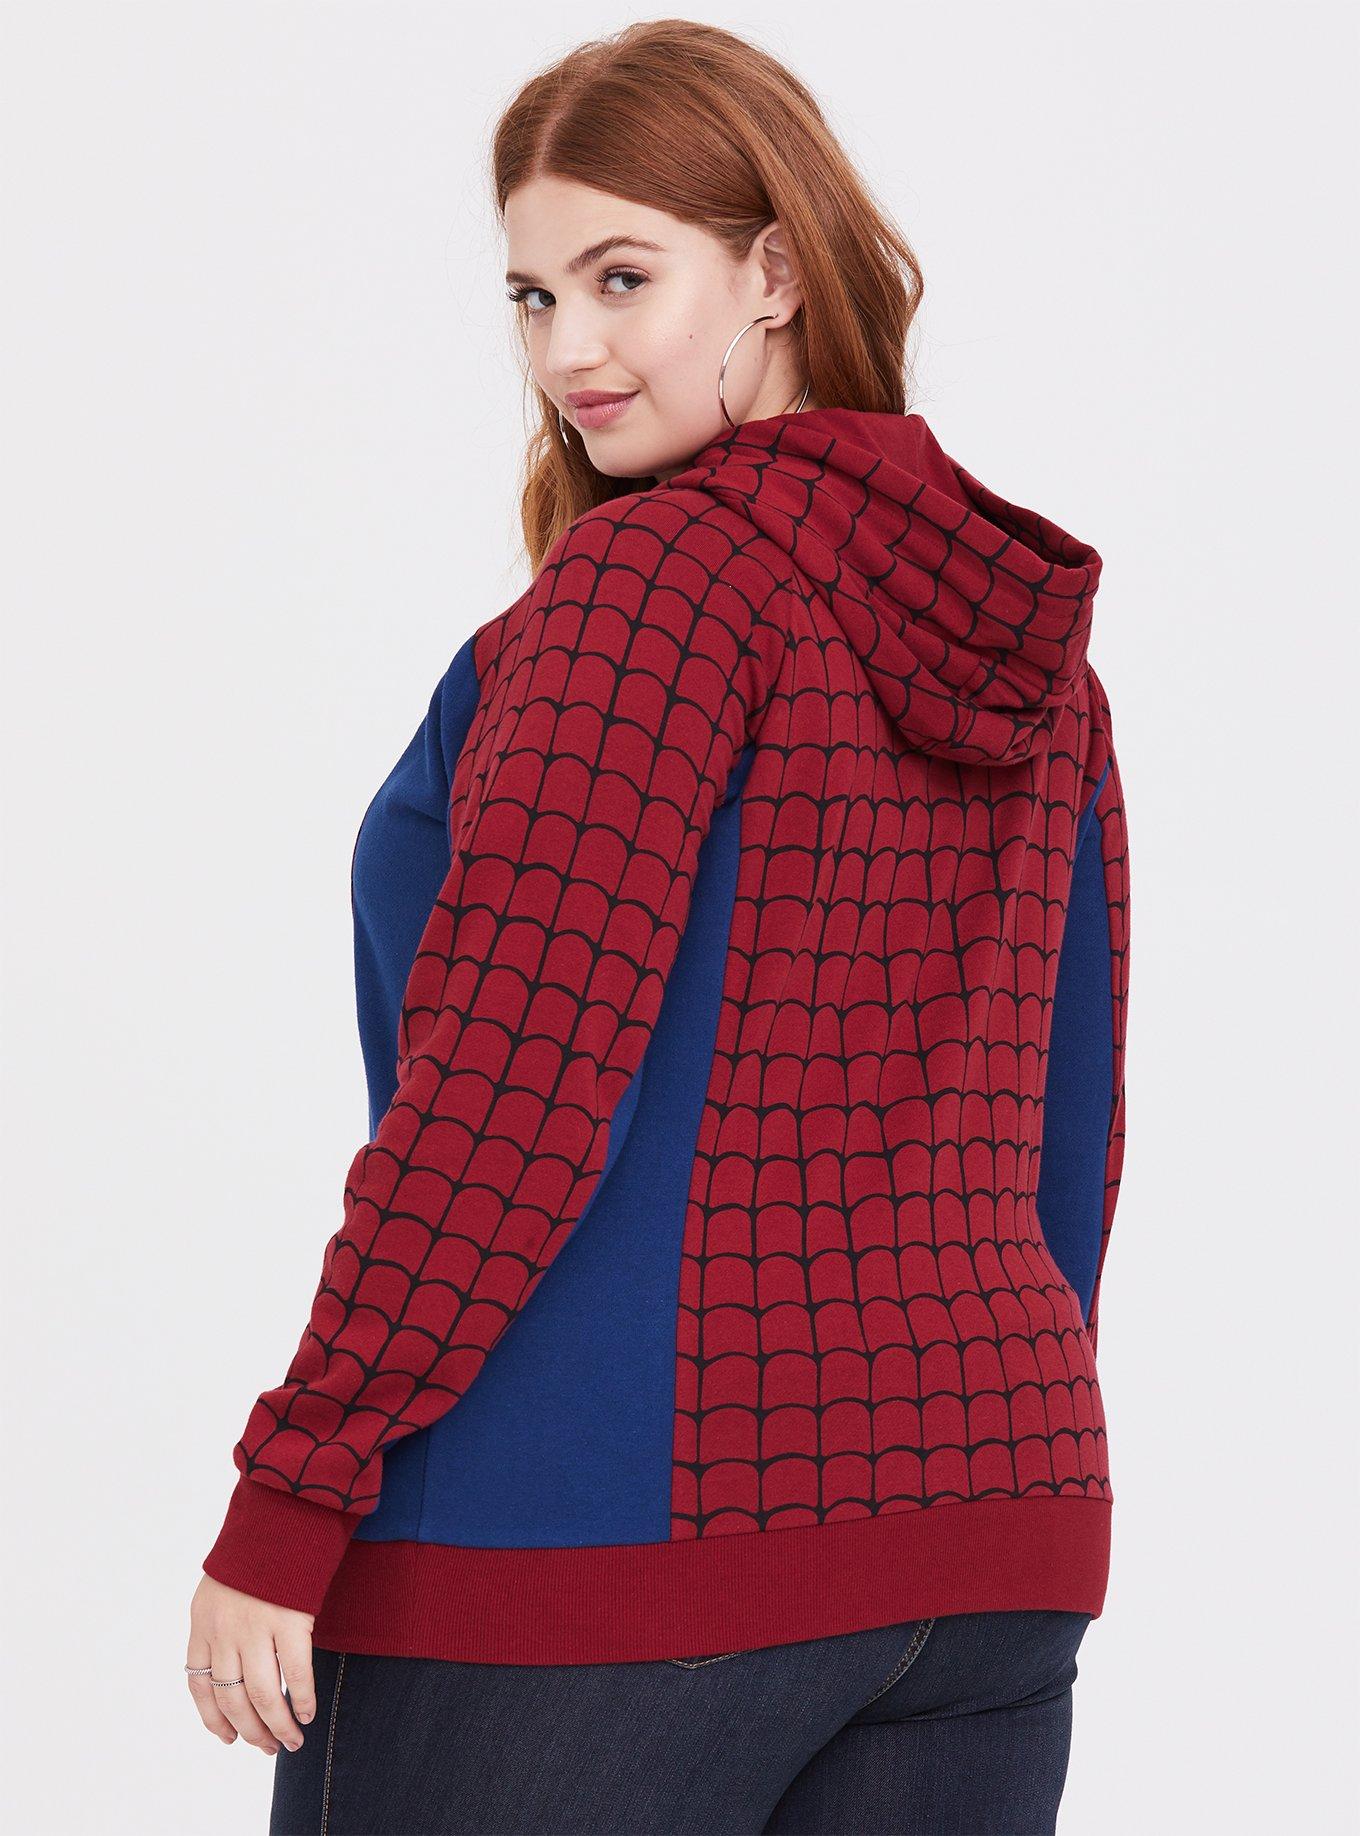 Plus Size - Her Universe Marvel Spiderman Red & Blue Zip Hoodie